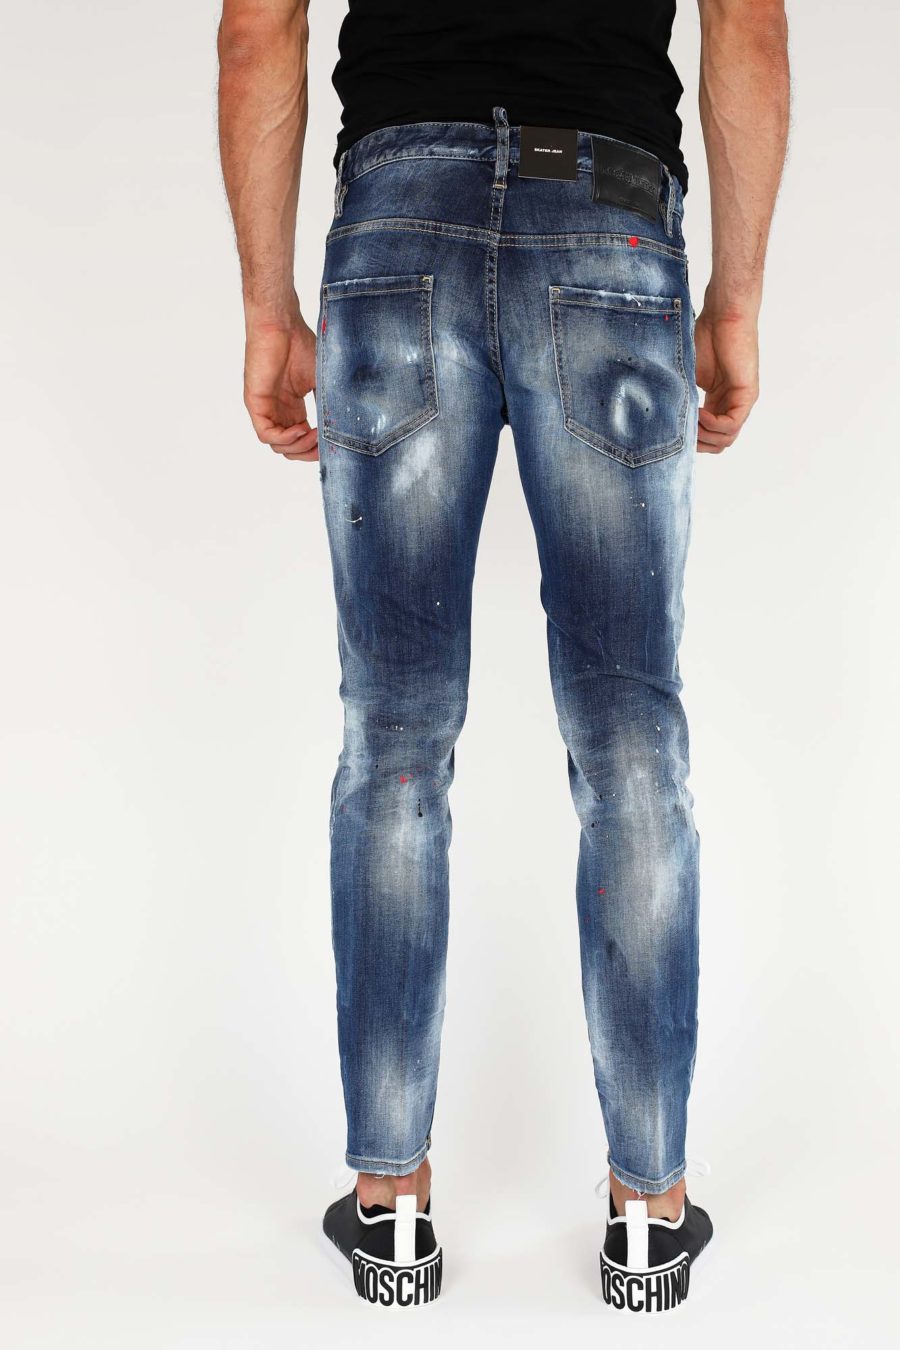 Jeans "Skater" azul con parche taches - IMG 9806